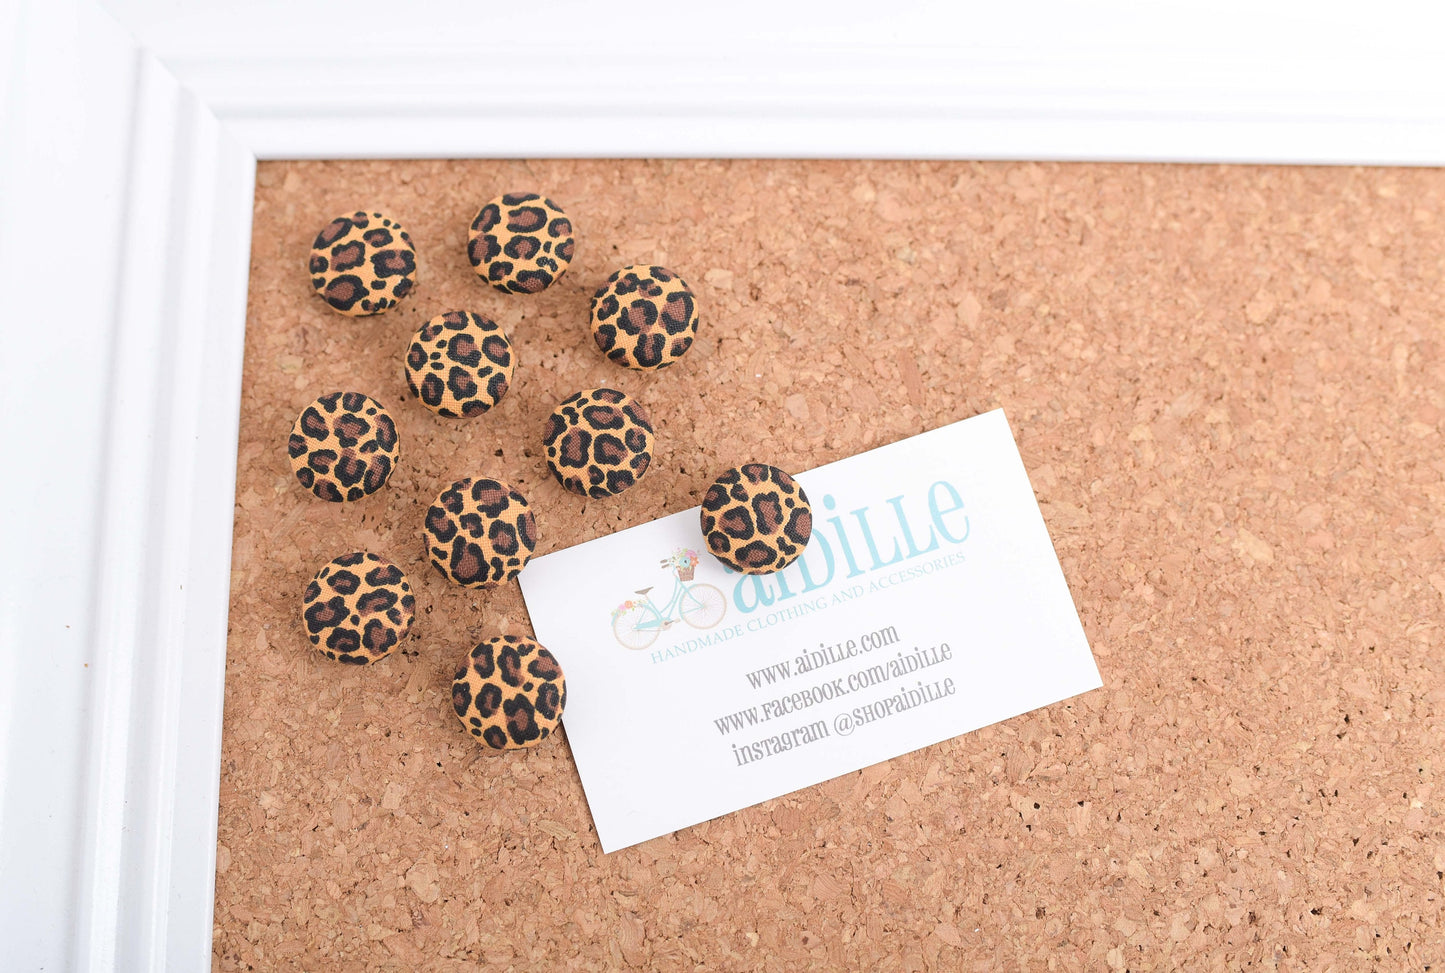 Leopard Print Fabric Button Push Pins- Set of 10